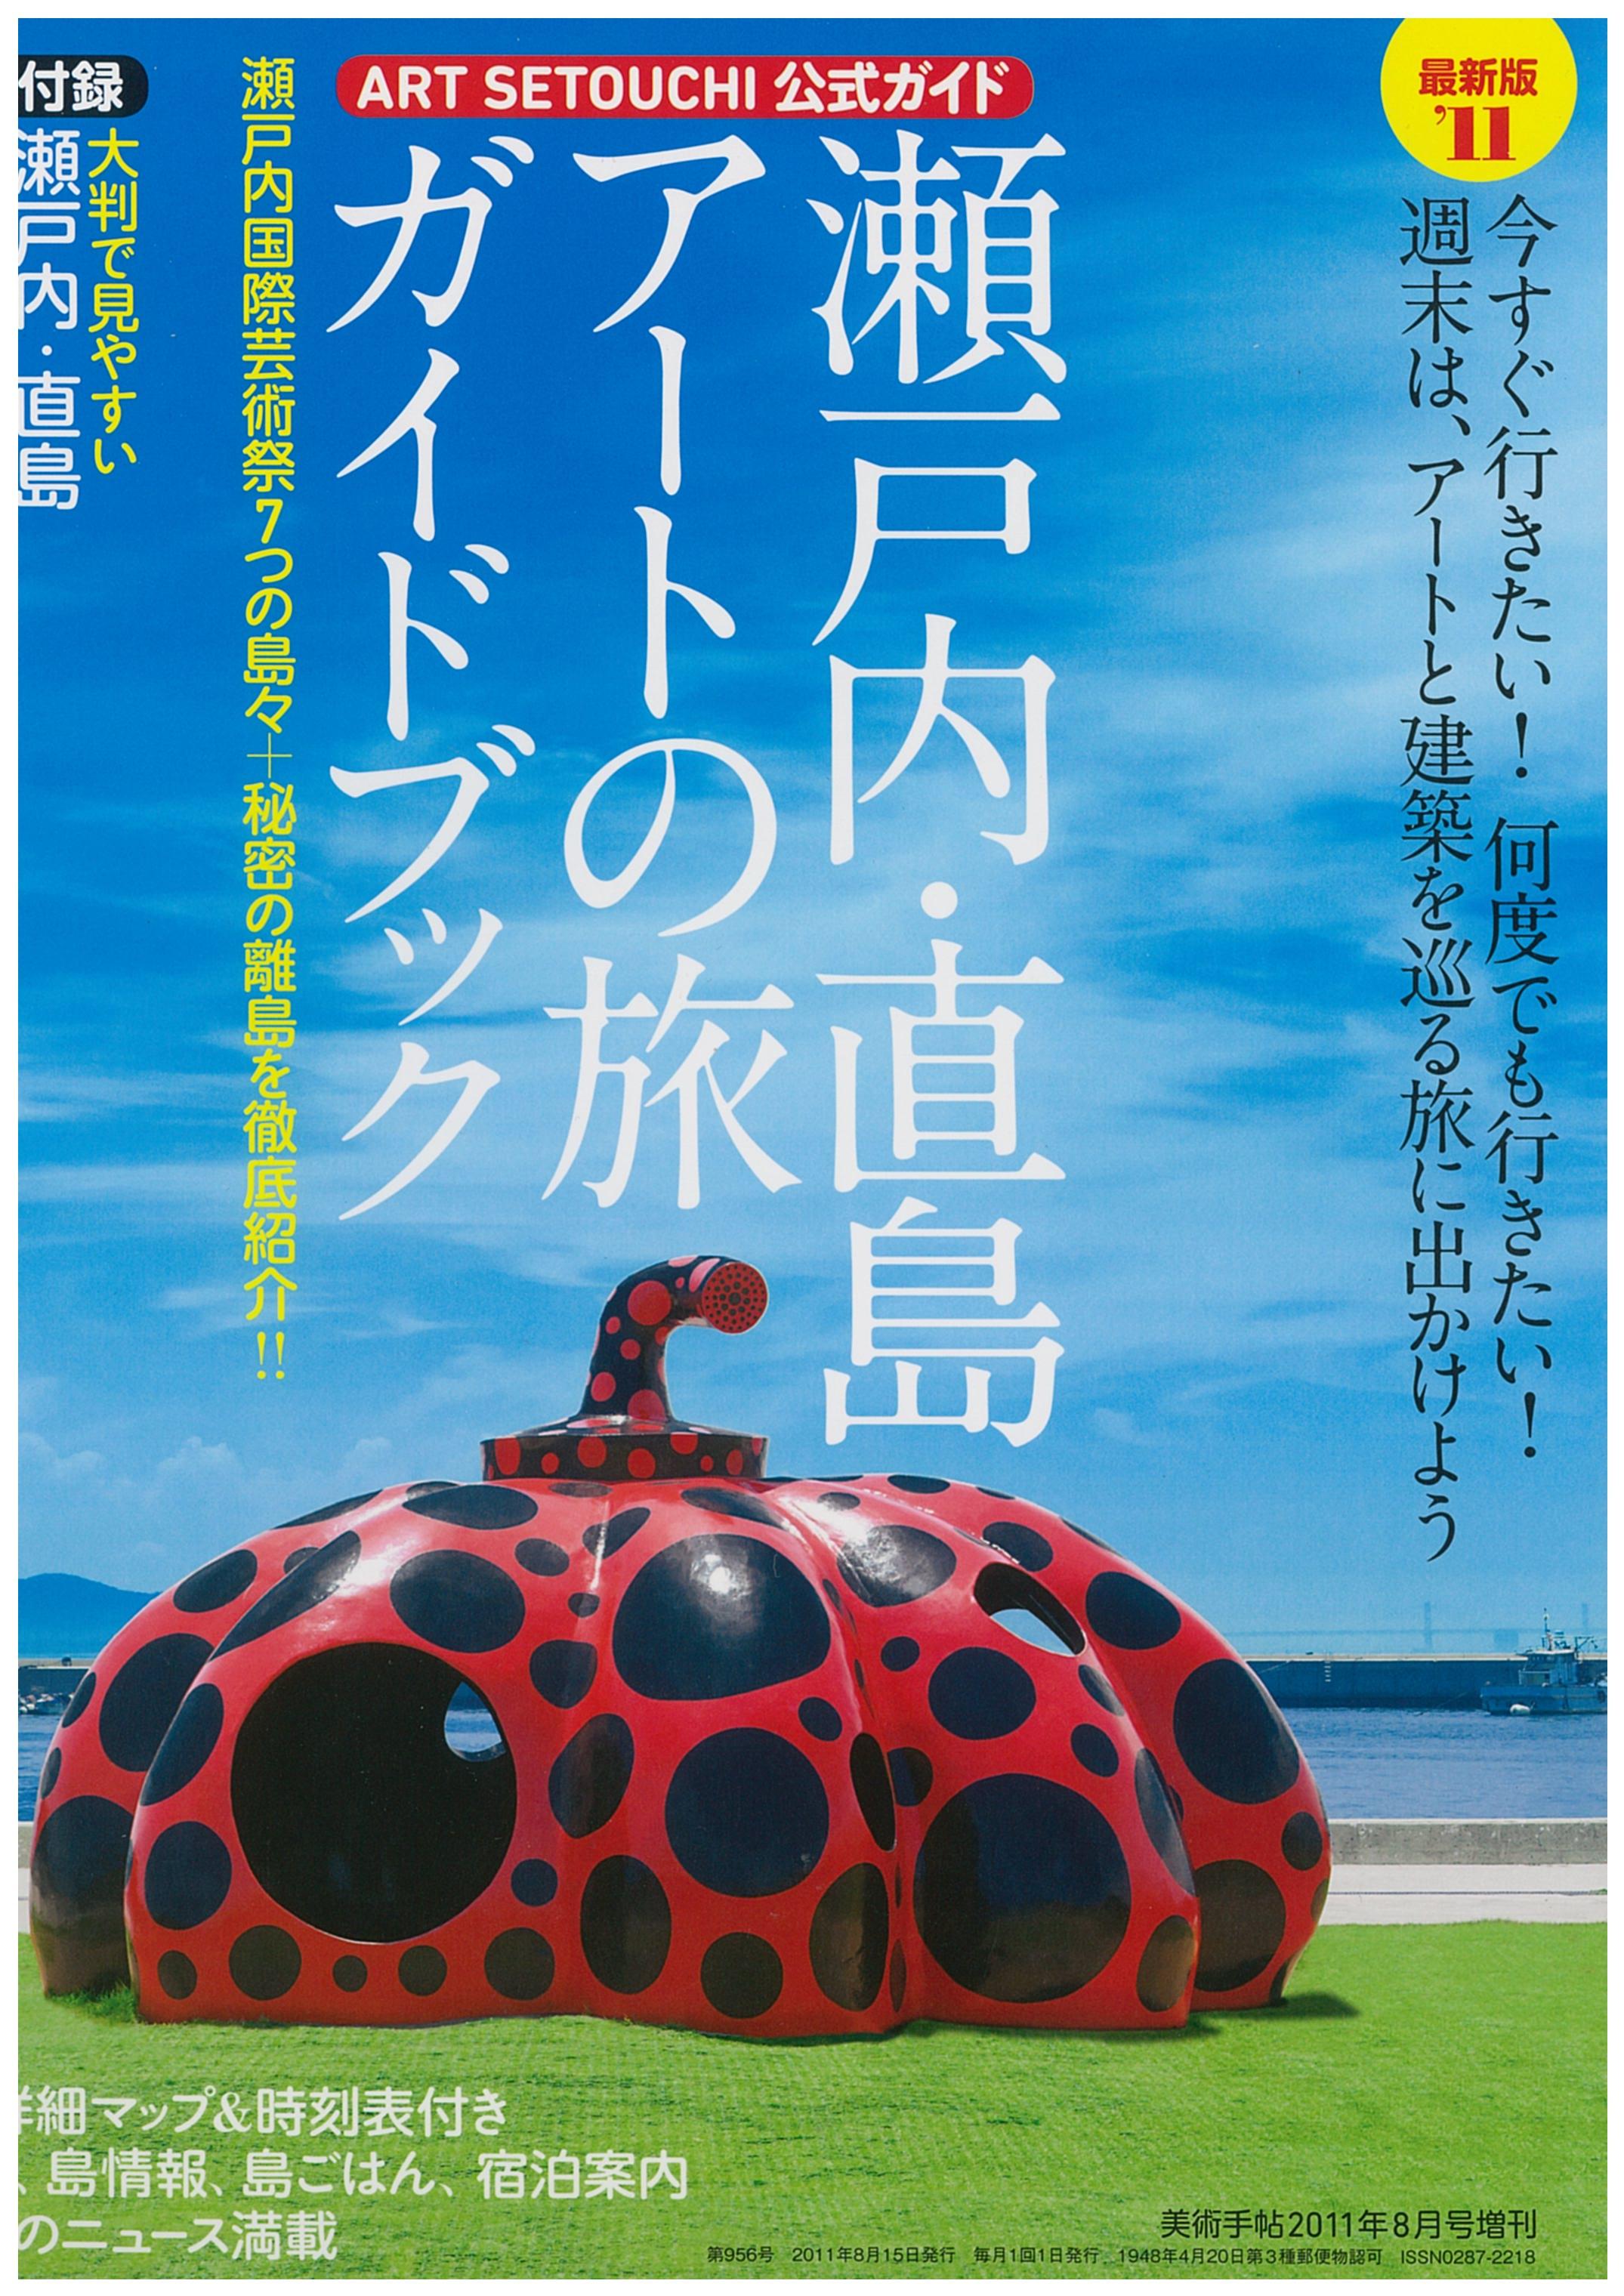 Official guide book ART SETOUCHI 2011